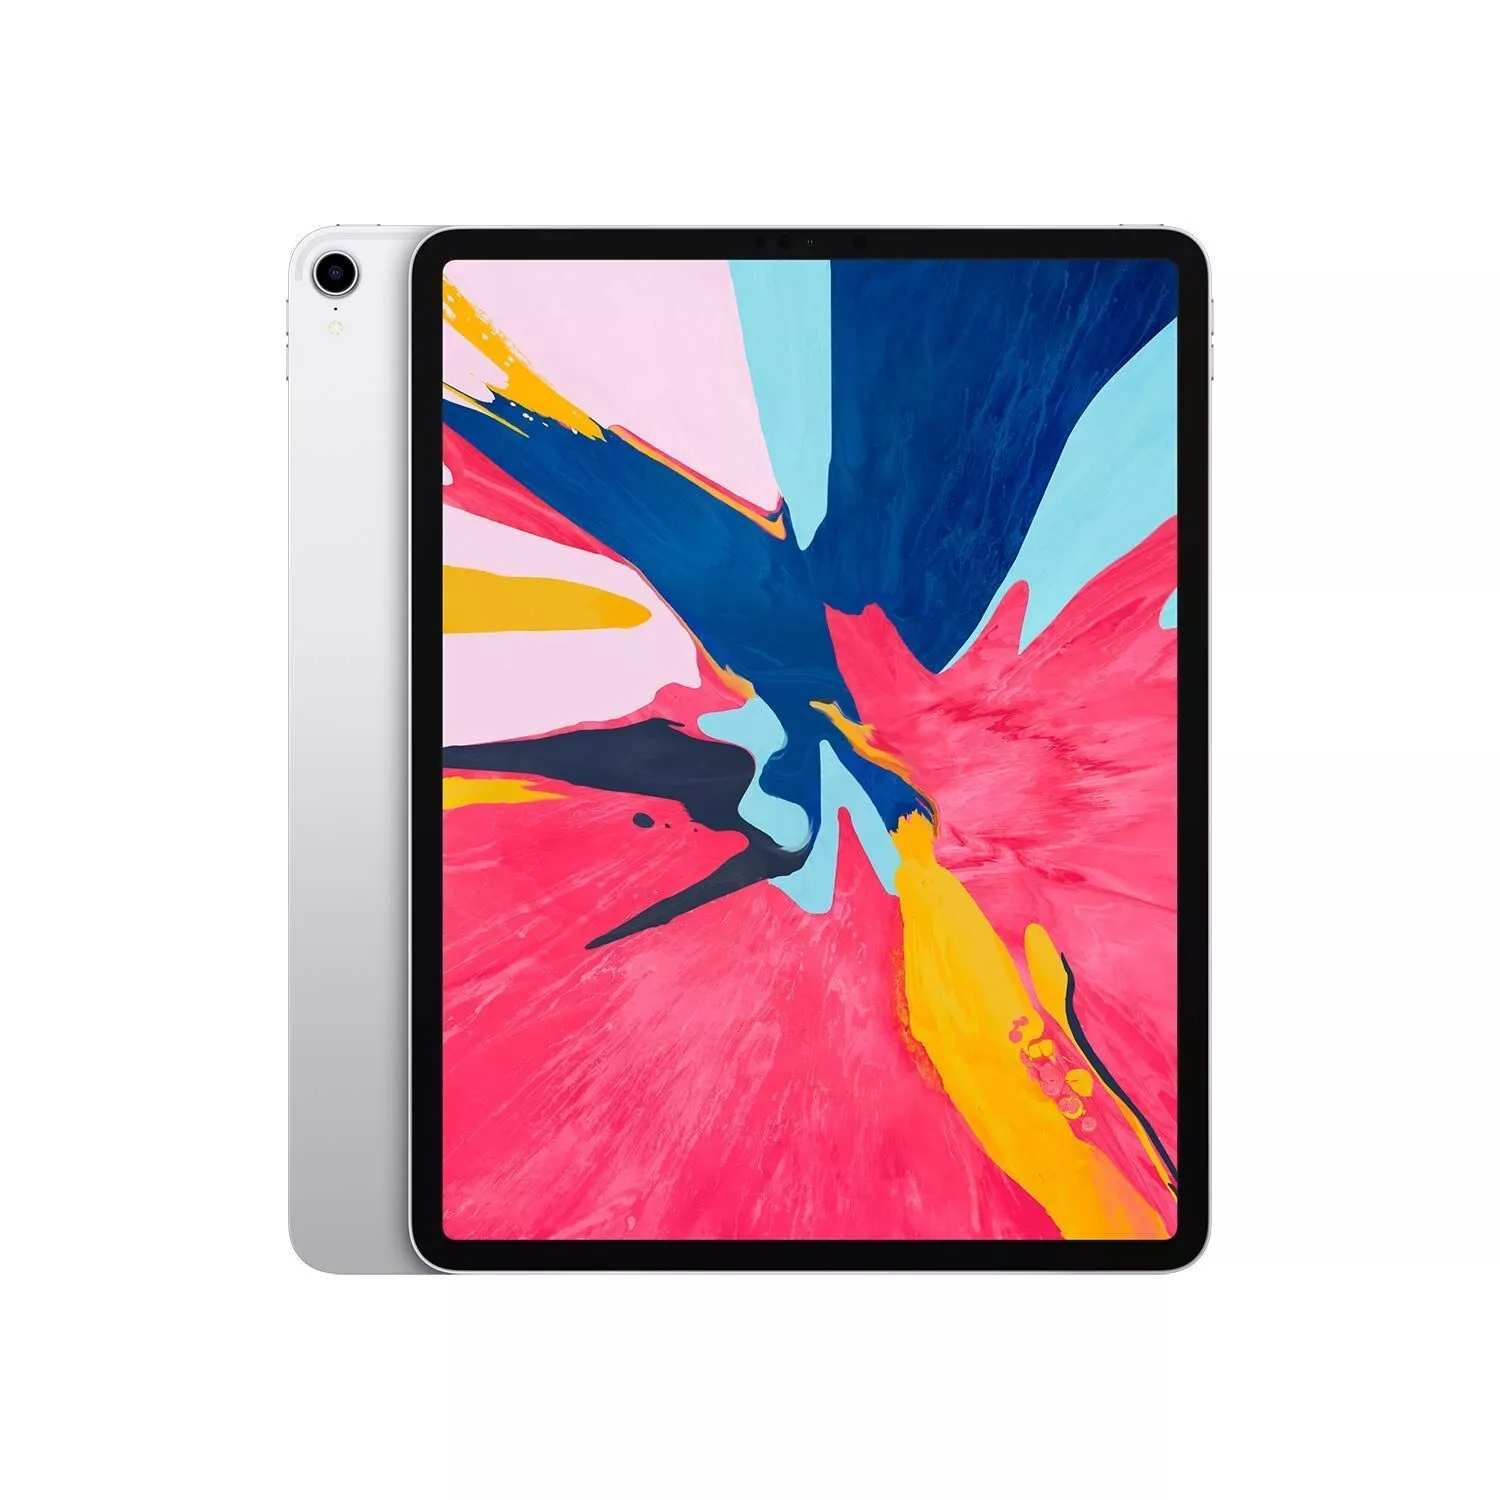 iPad Pro 12.9 3rd Generation